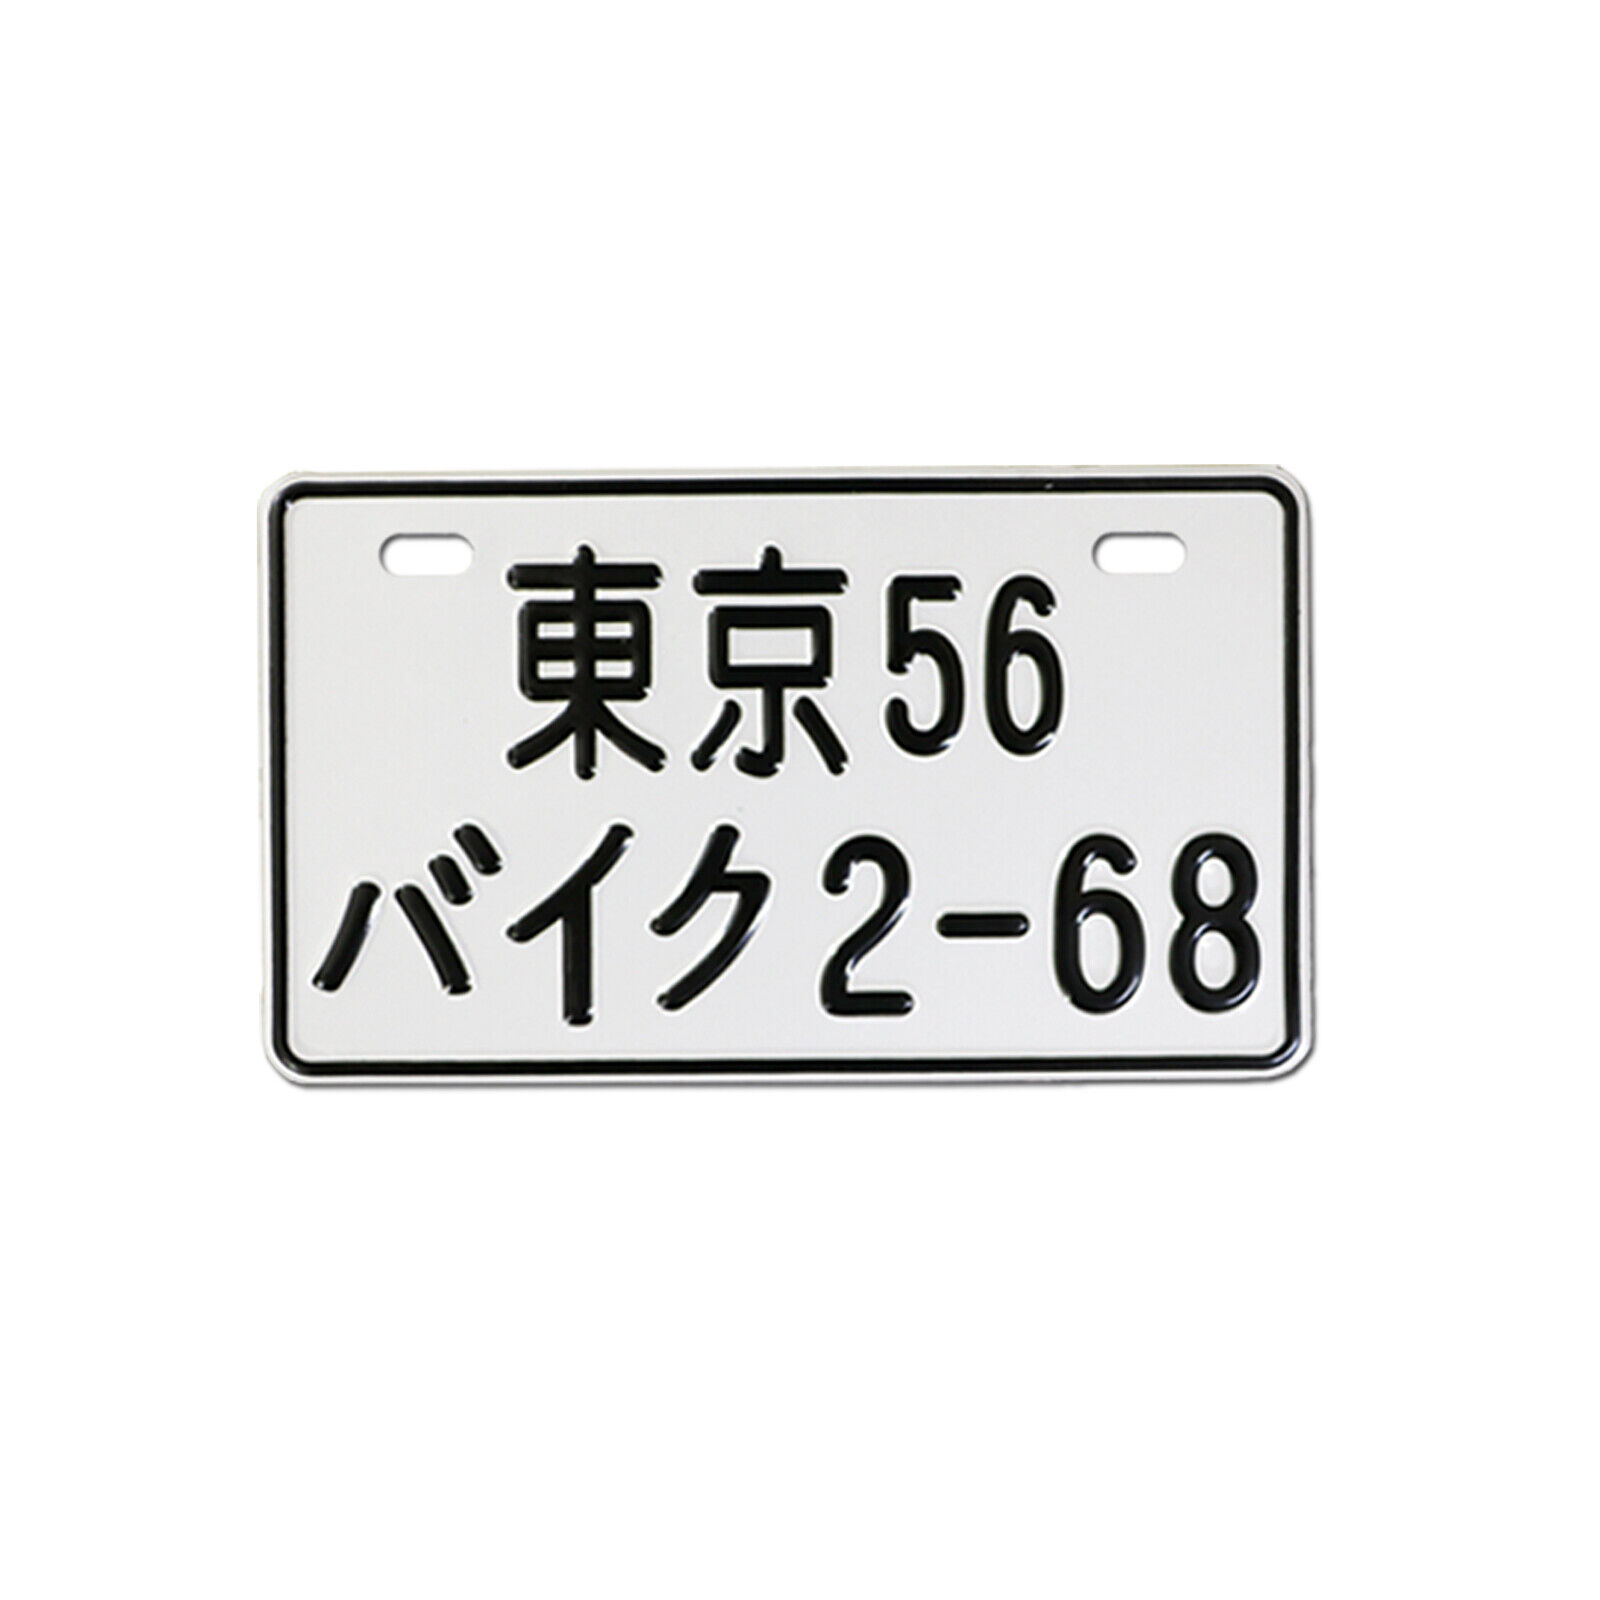 Japanese JDM Motorcycle Moped Bike Cafe Decoration Aluminium License Plate Tag